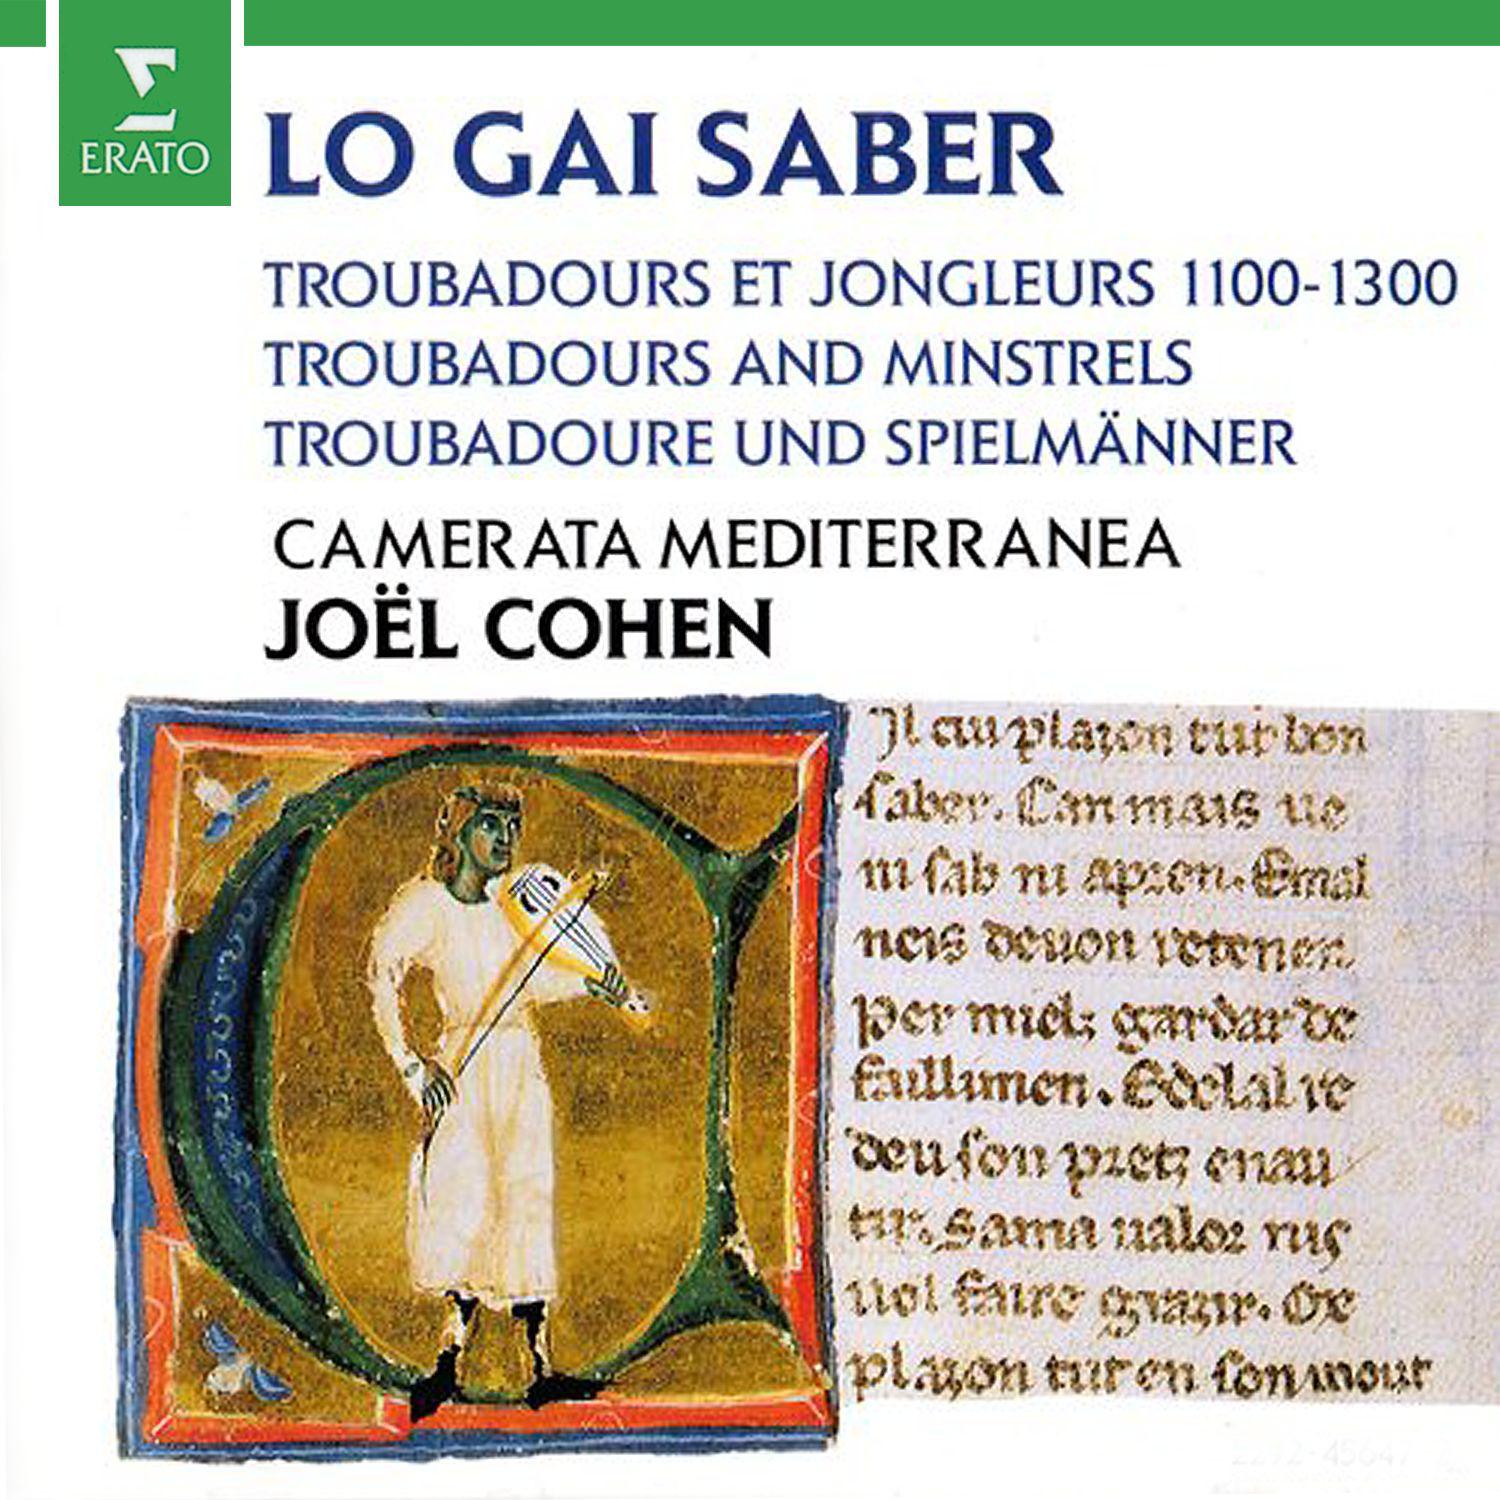 Joel Cohen: Lo Gai Saber - Troubadours and Minstrels 1100-1300